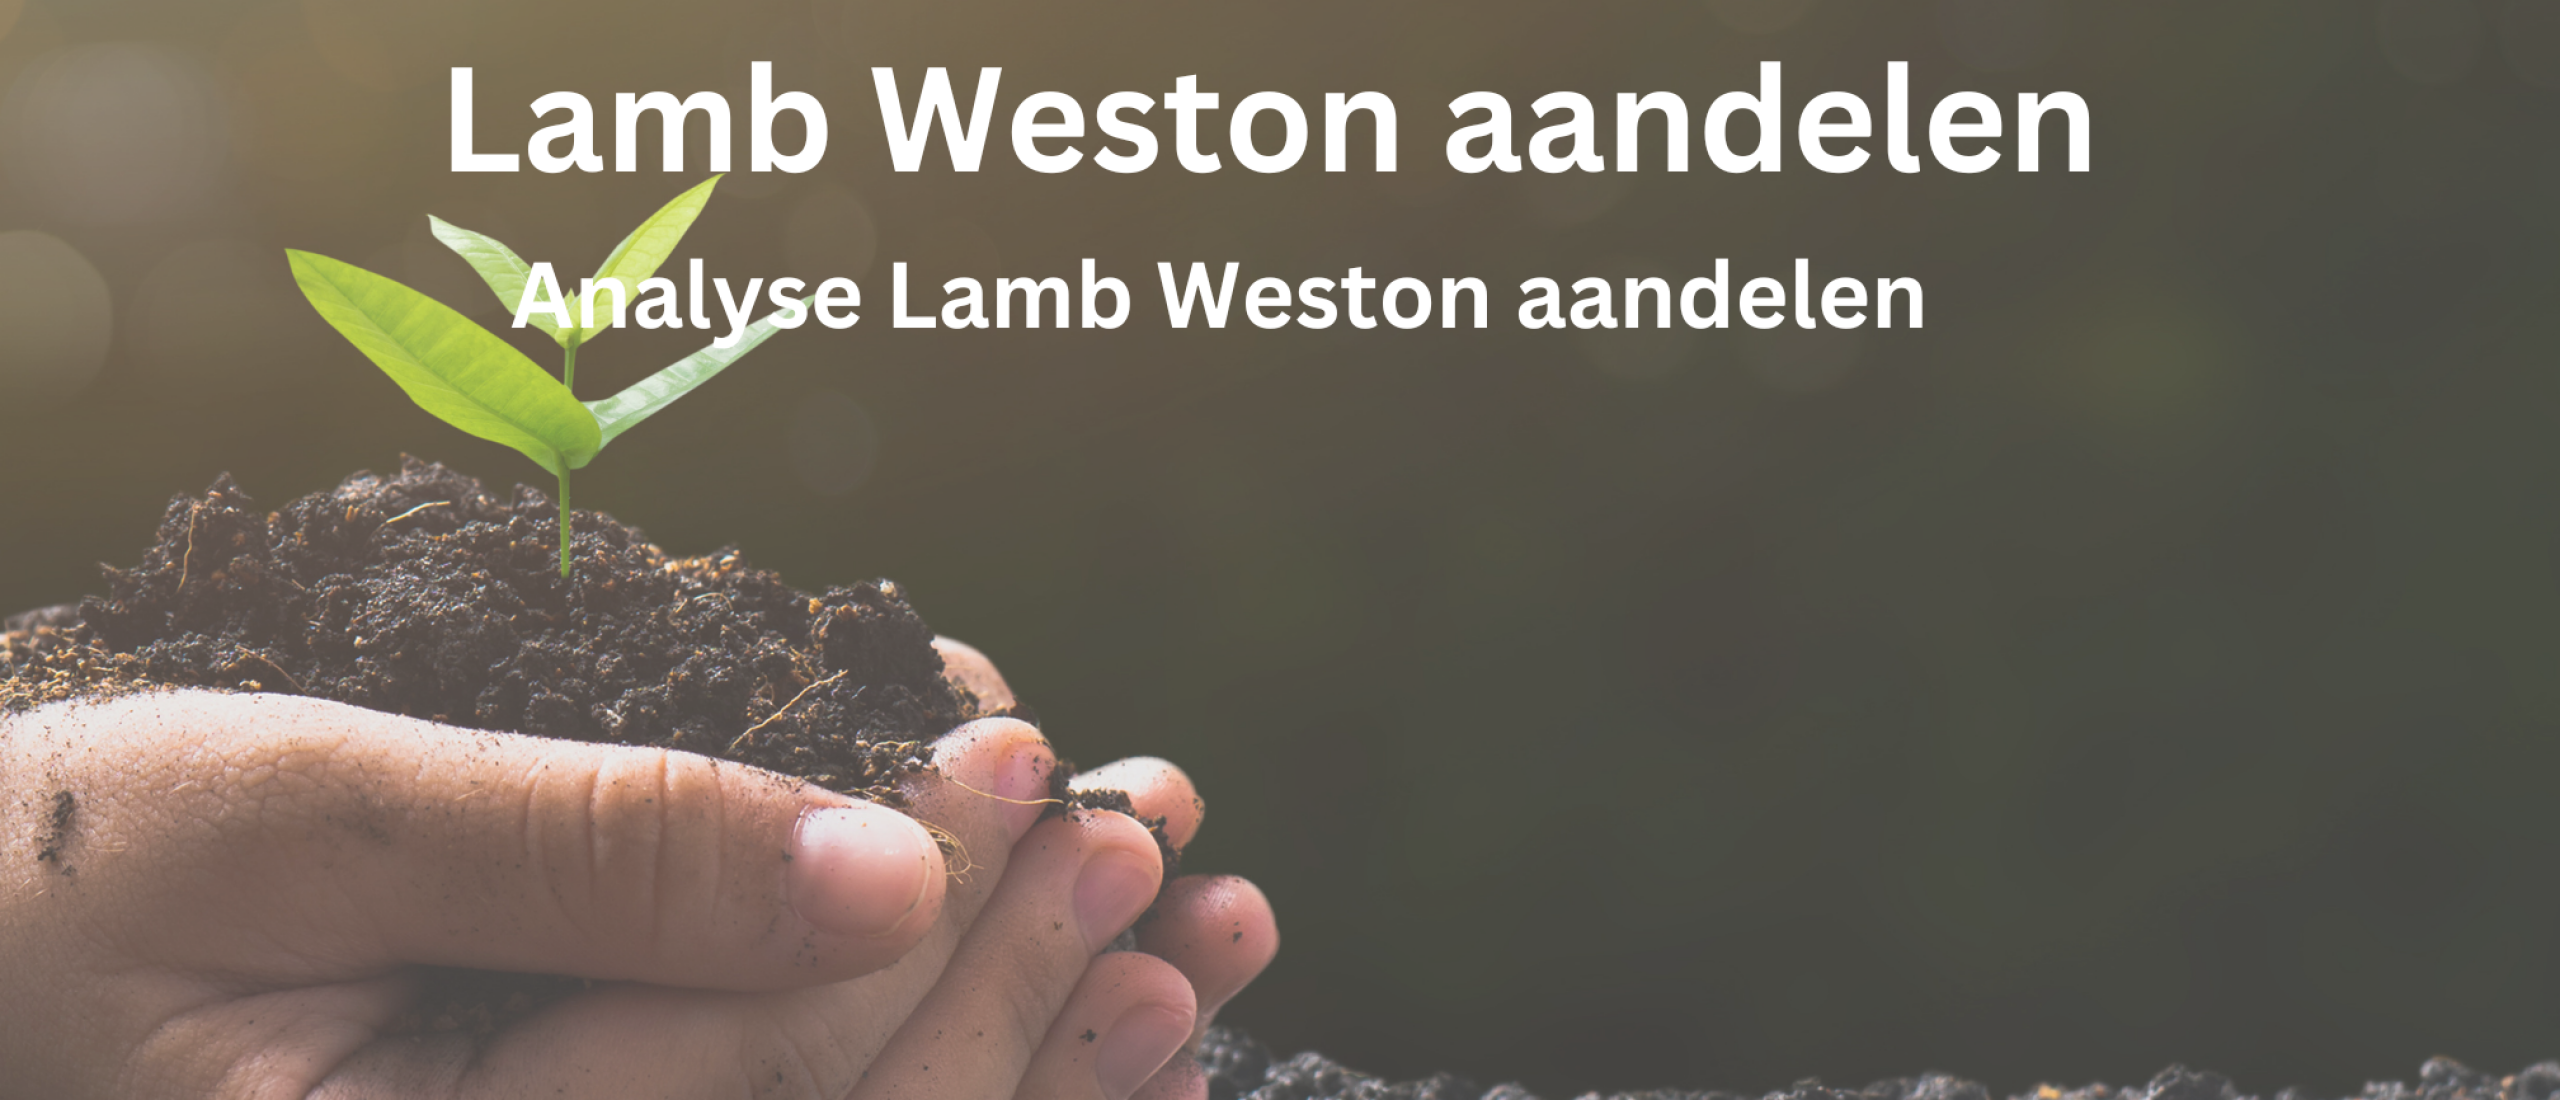 Lamb Weston Holdings aandelen kopen? Analyse +31,2% Groei | Happy Investors